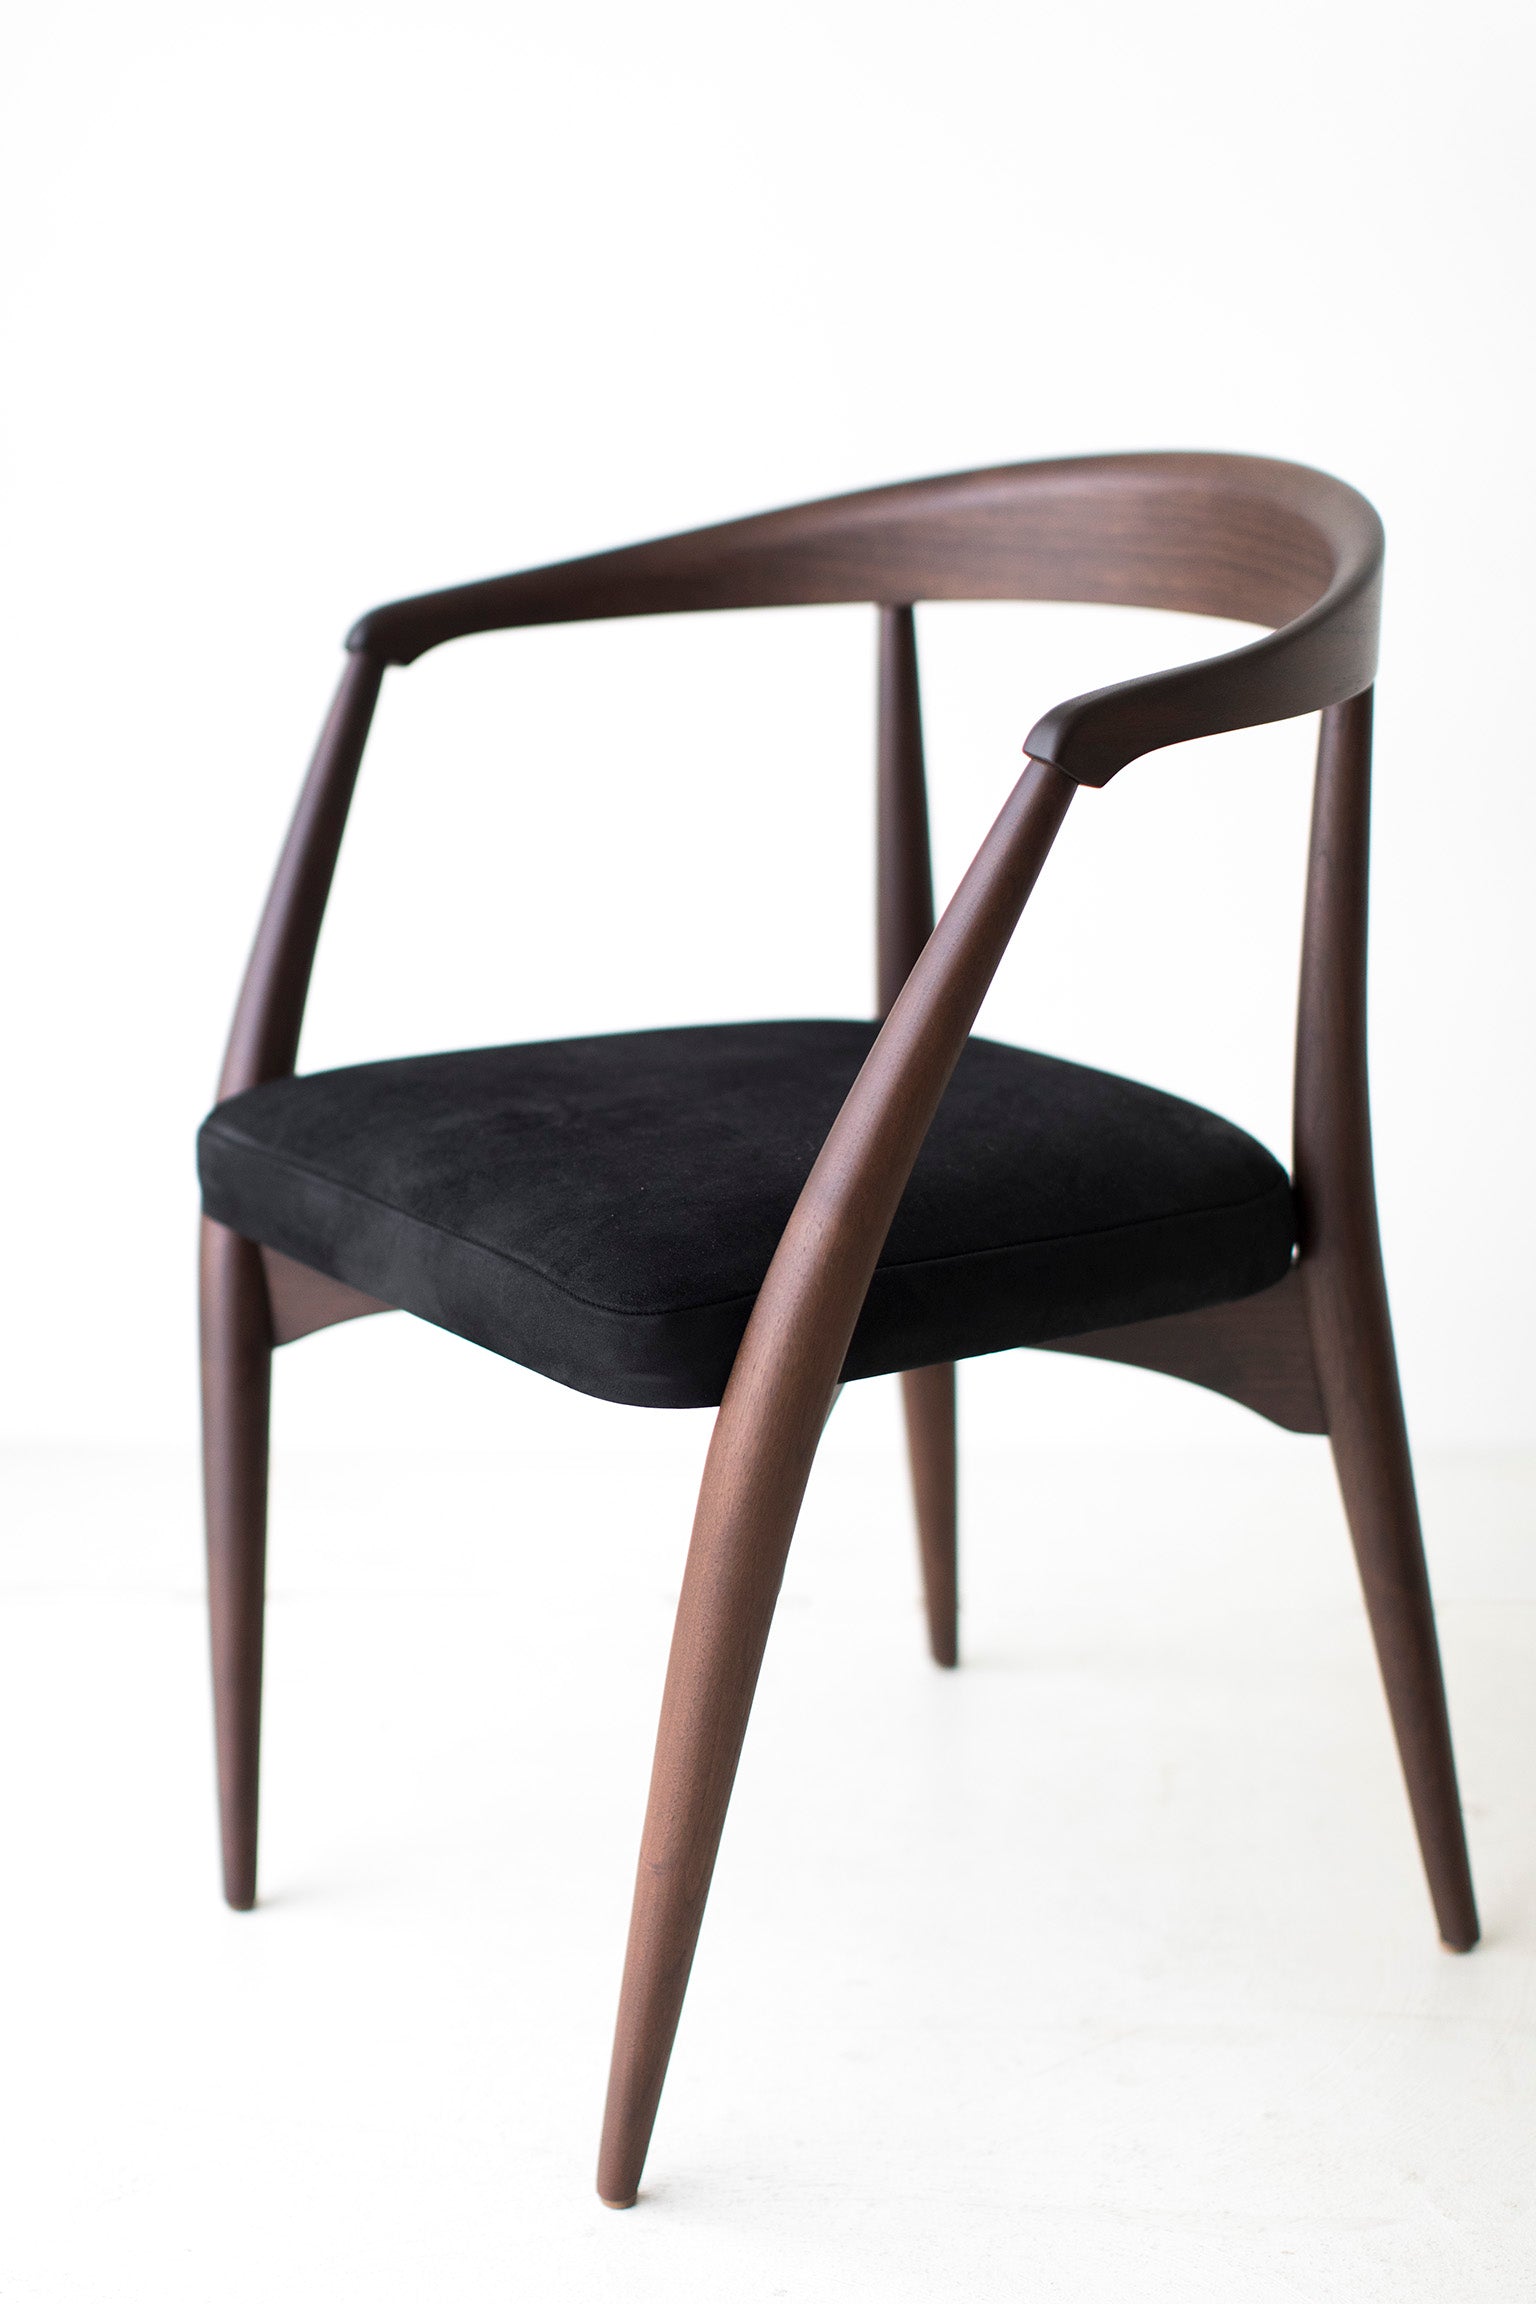      peabody-modern-walnut-dining-chairs-1708P-02